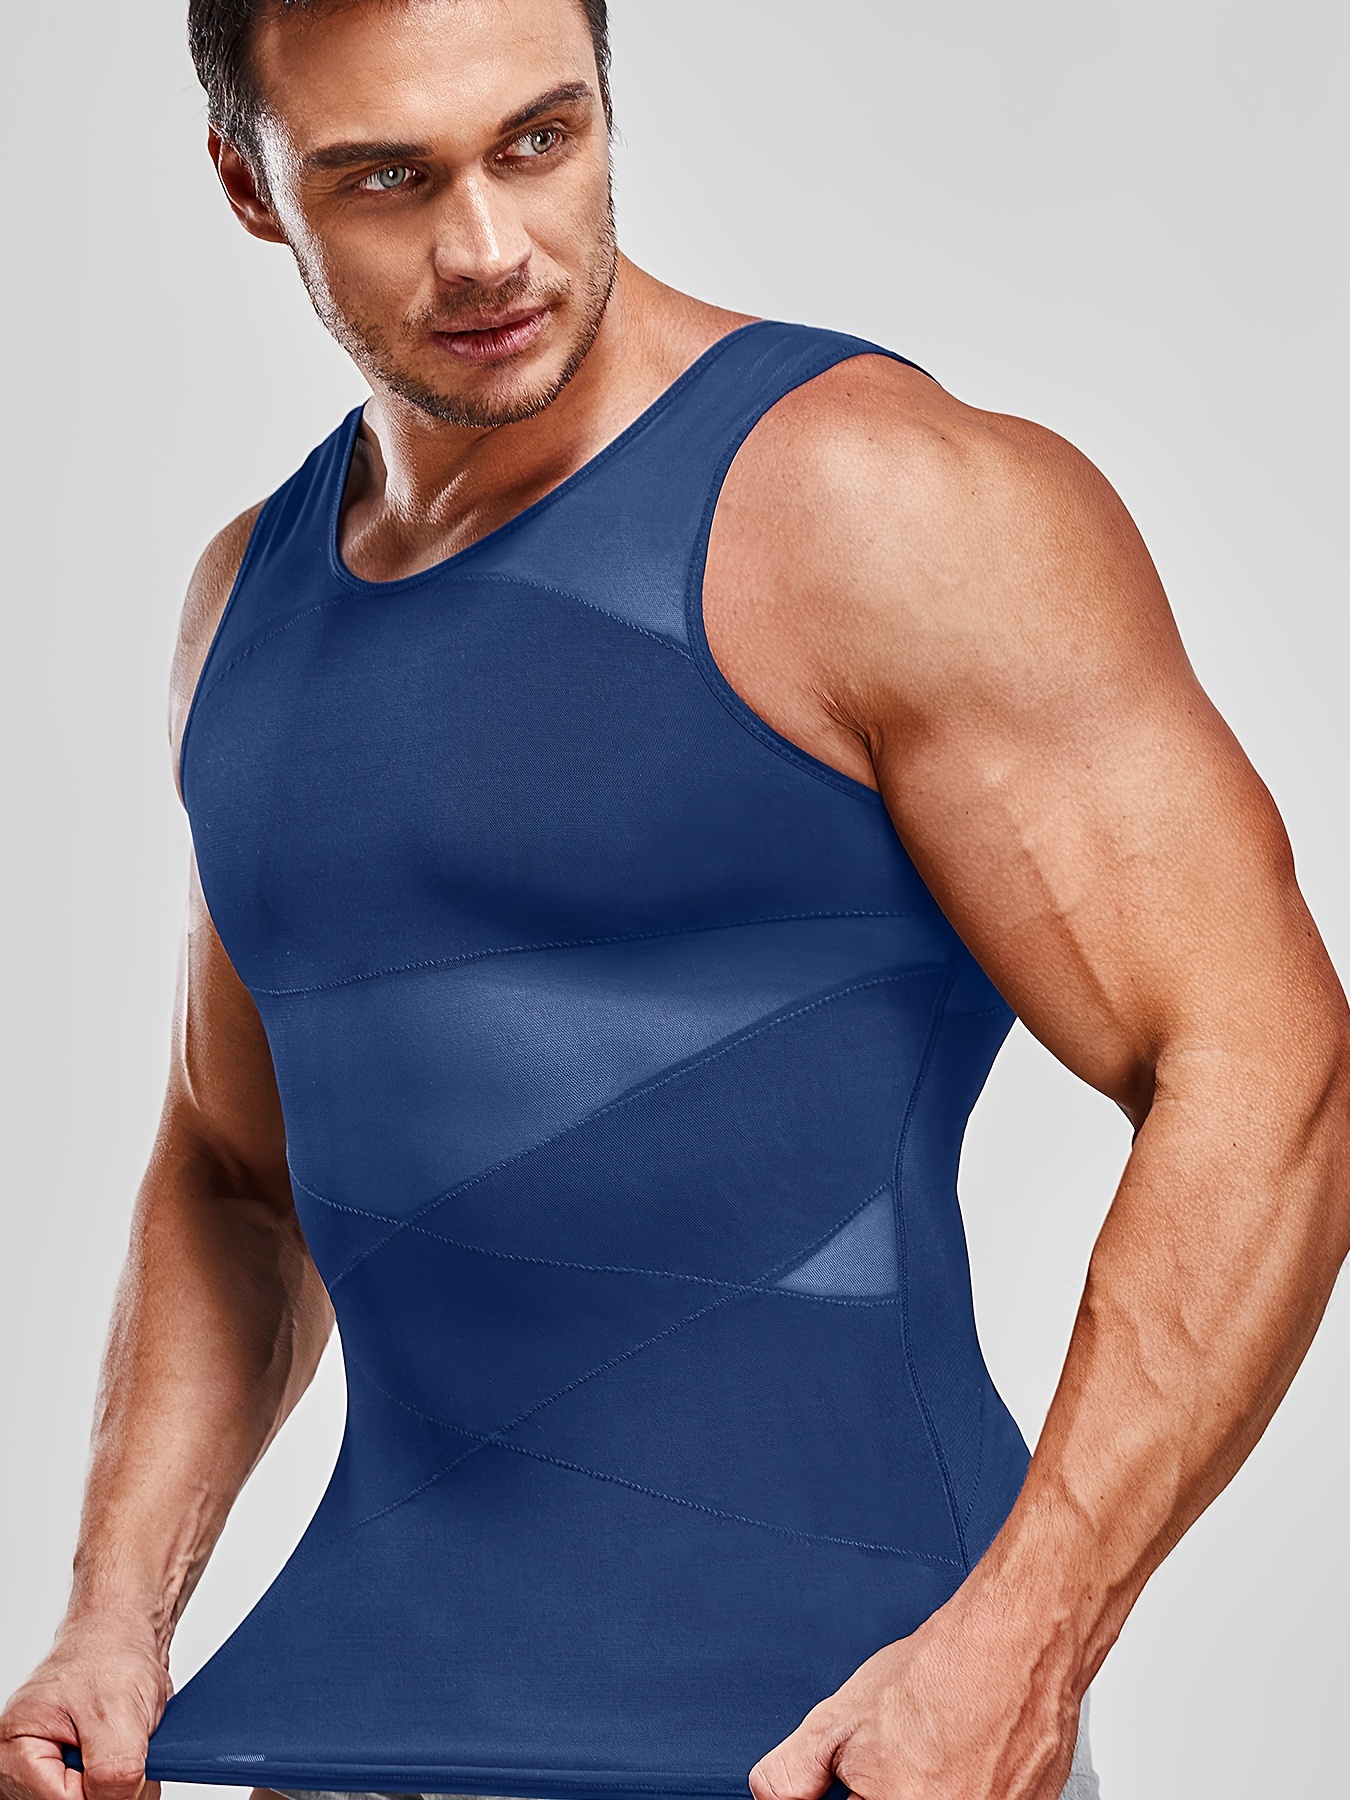 ZURU BUNCH Men's Slimming Body Shaper Vest Shirt Abs Abdomen Slim